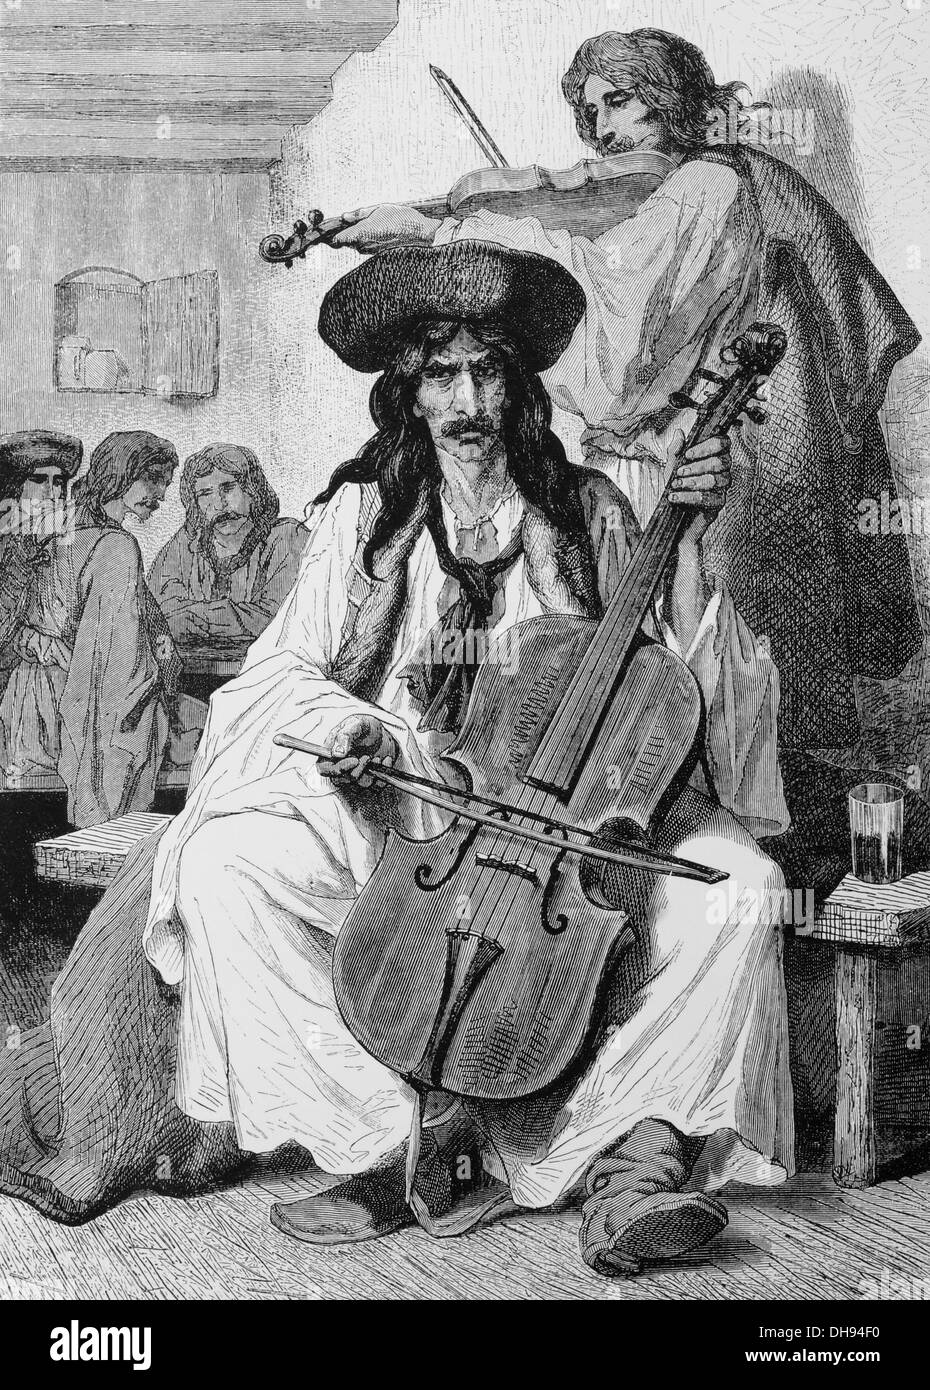 Europa. Zigeuner-Musiker in Ungarn. 1800-1900. Gravur. des 19. Jahrhunderts. Stockfoto